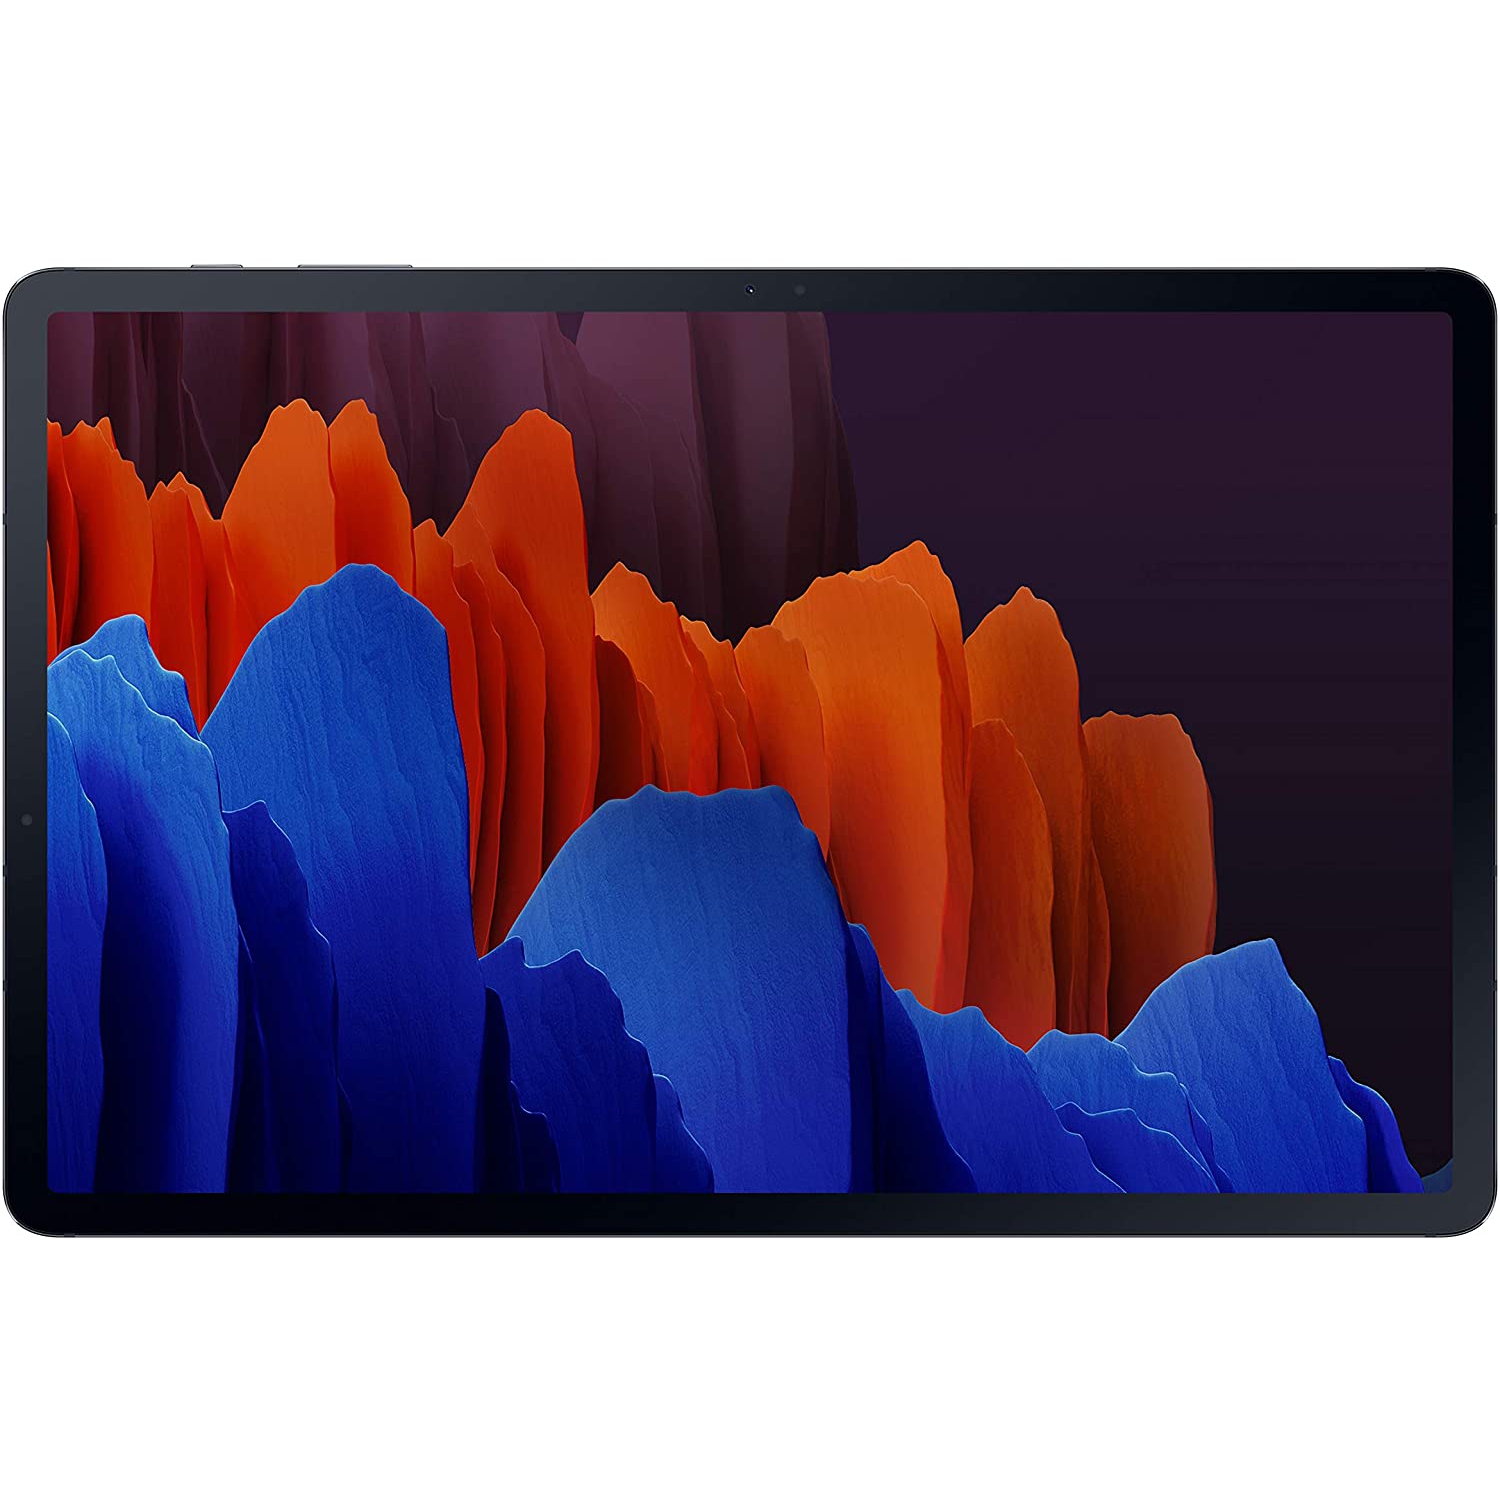 Samsung Galaxy Tab S7+ (SM-T970) 12.4” Tablet with 128GB of Storage - Wi-Fi - Mystic Black